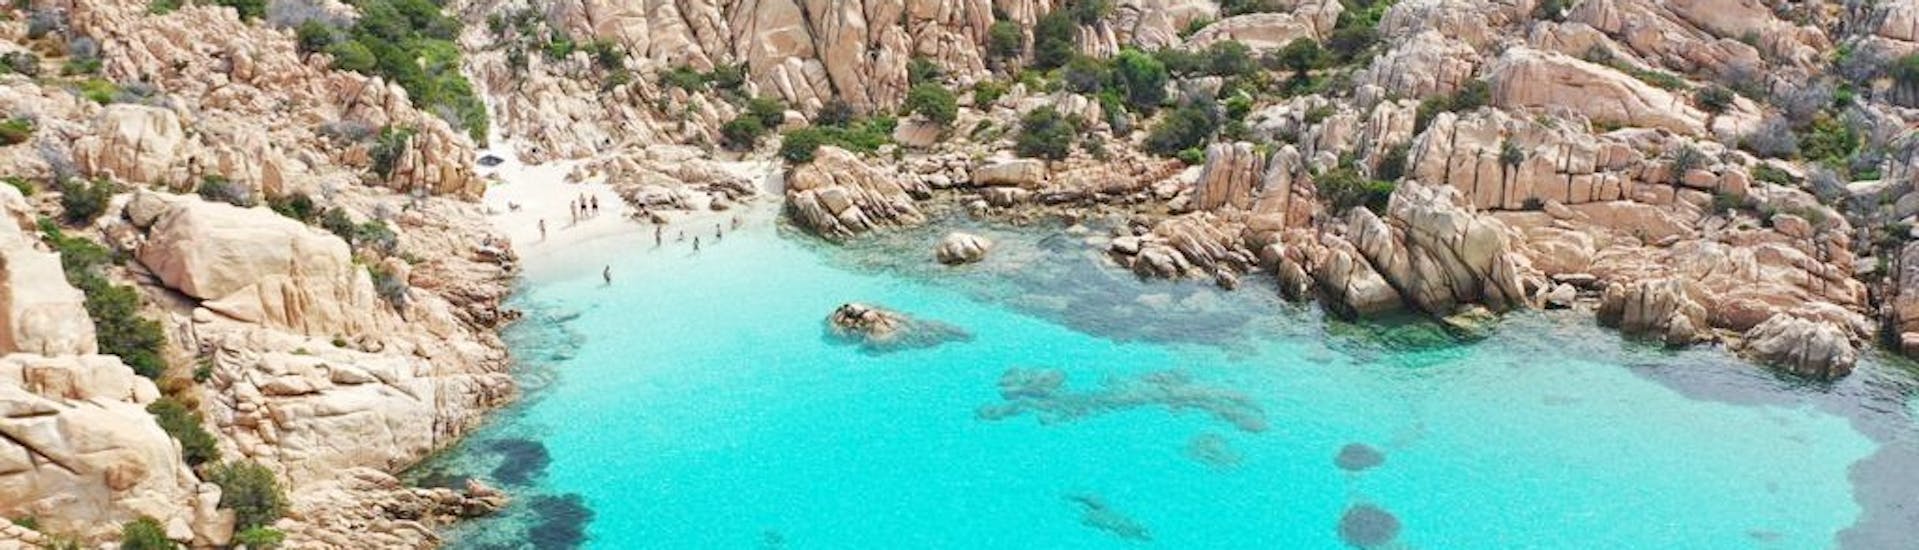 Enchanting Sardinian beach to visit during a private RIB boat trip from Cannigione to the La Maddalena archipelago with Noleggio Le Isole Cannigione.